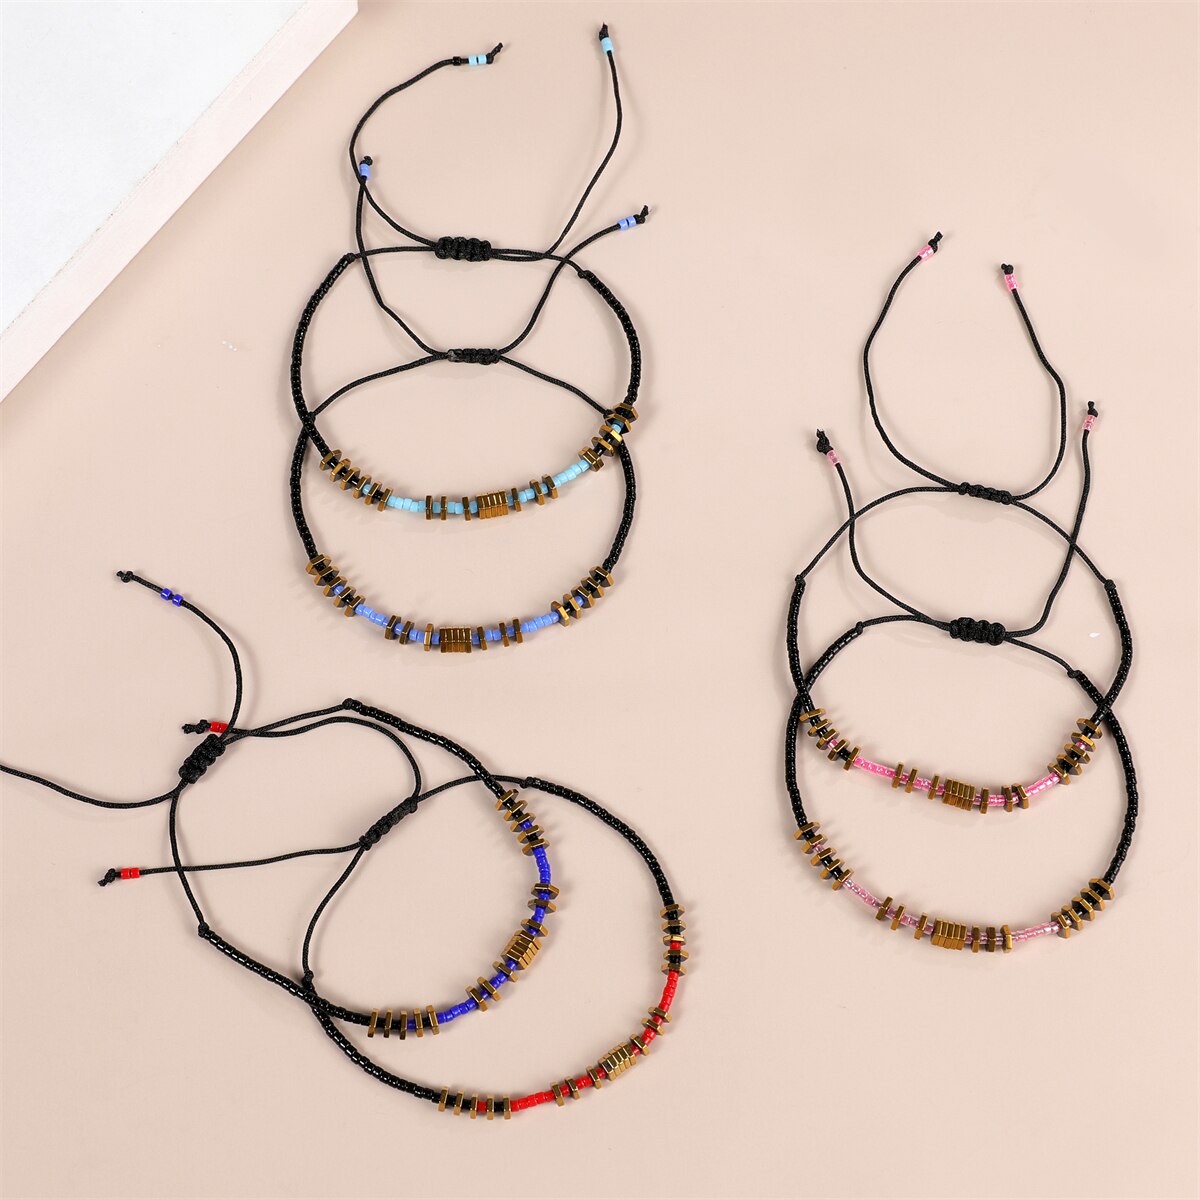 Vintage Copper Charm Bracelets Women Children Colorful Rice Beads Handmade Elastic Friendship Jewelry Valentine's Day Gift